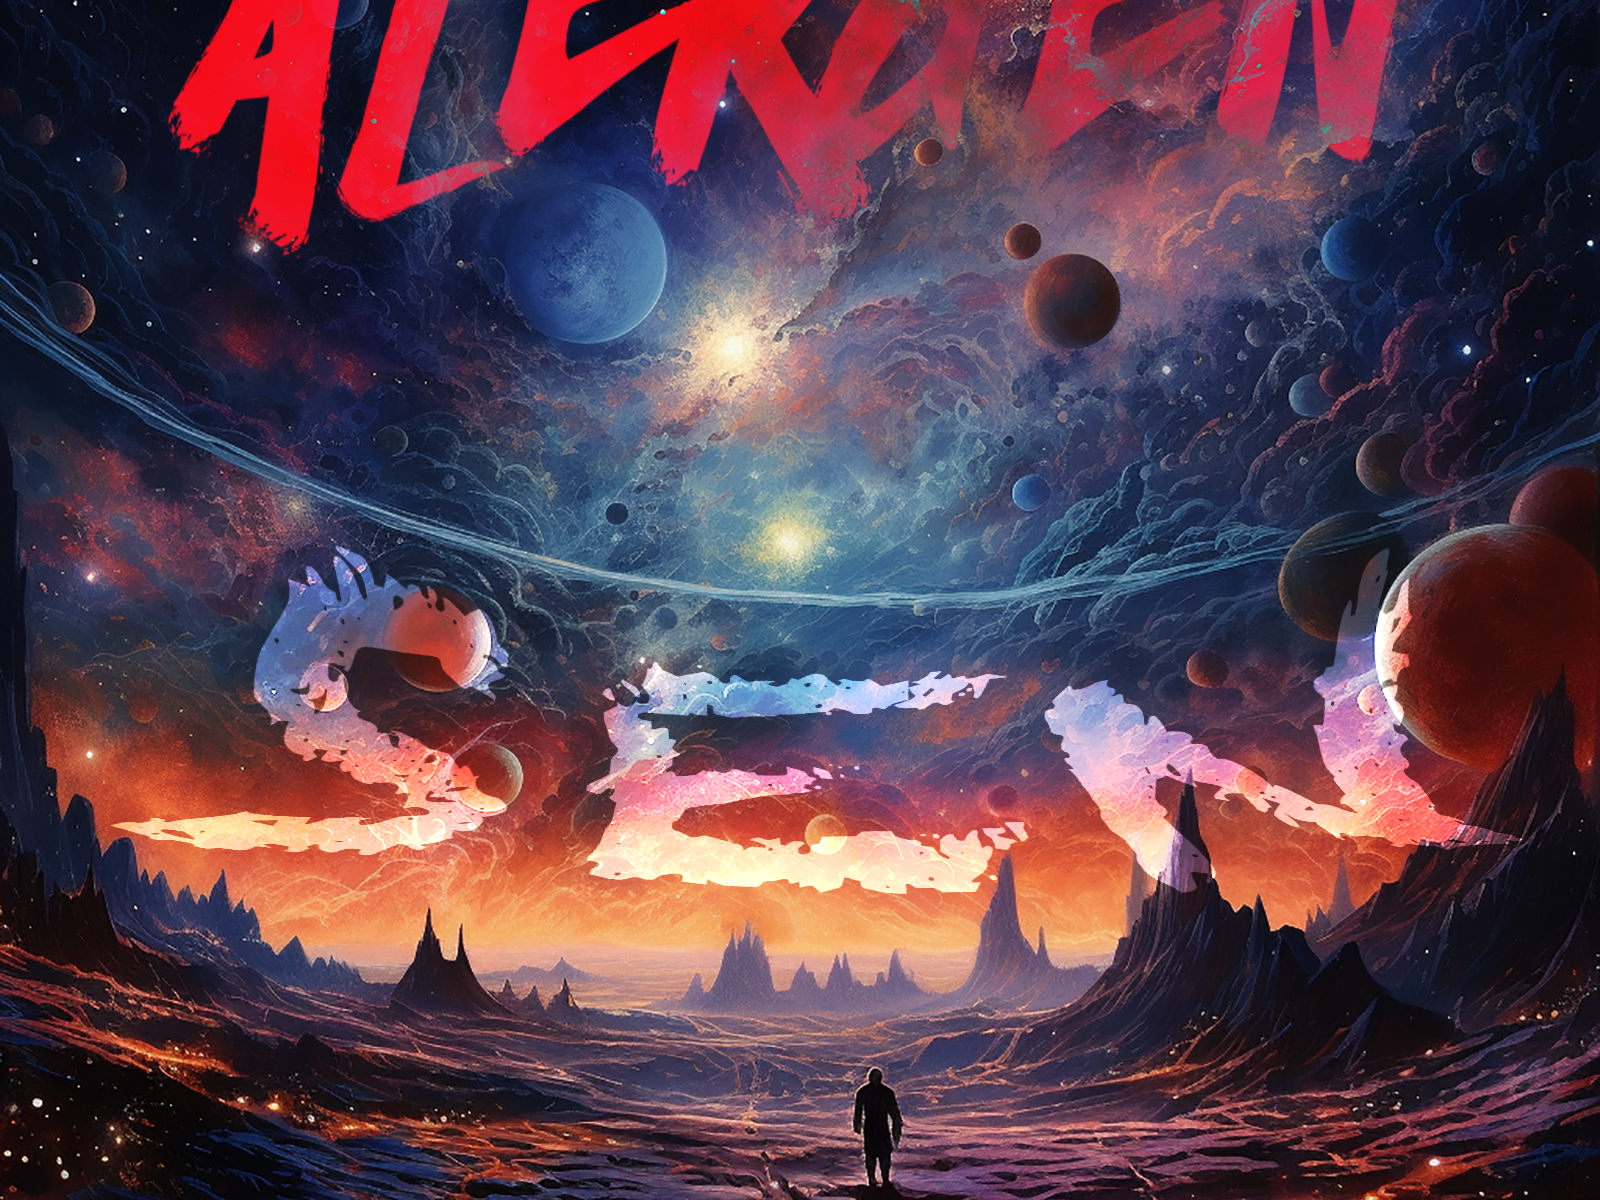 Alergen COVER "Sen" by Play Music